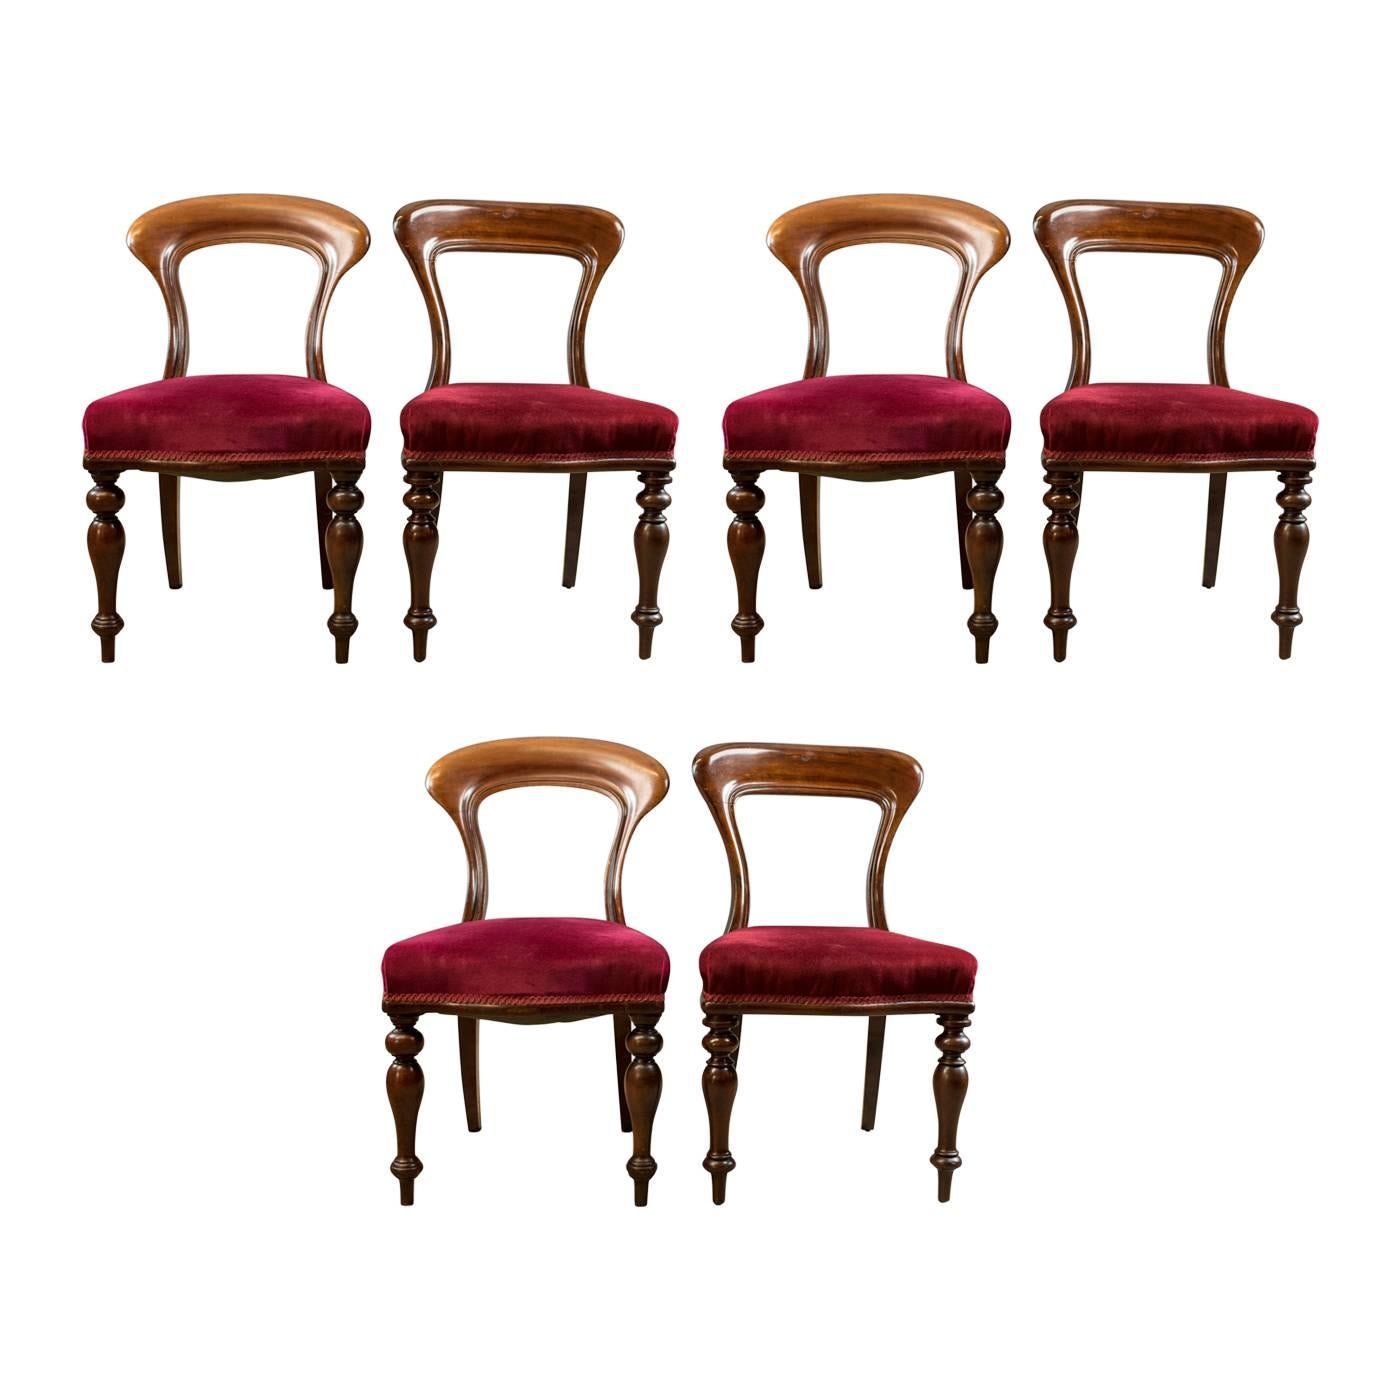 Six Antique Victorian Dining Chairs, English, circa 1840